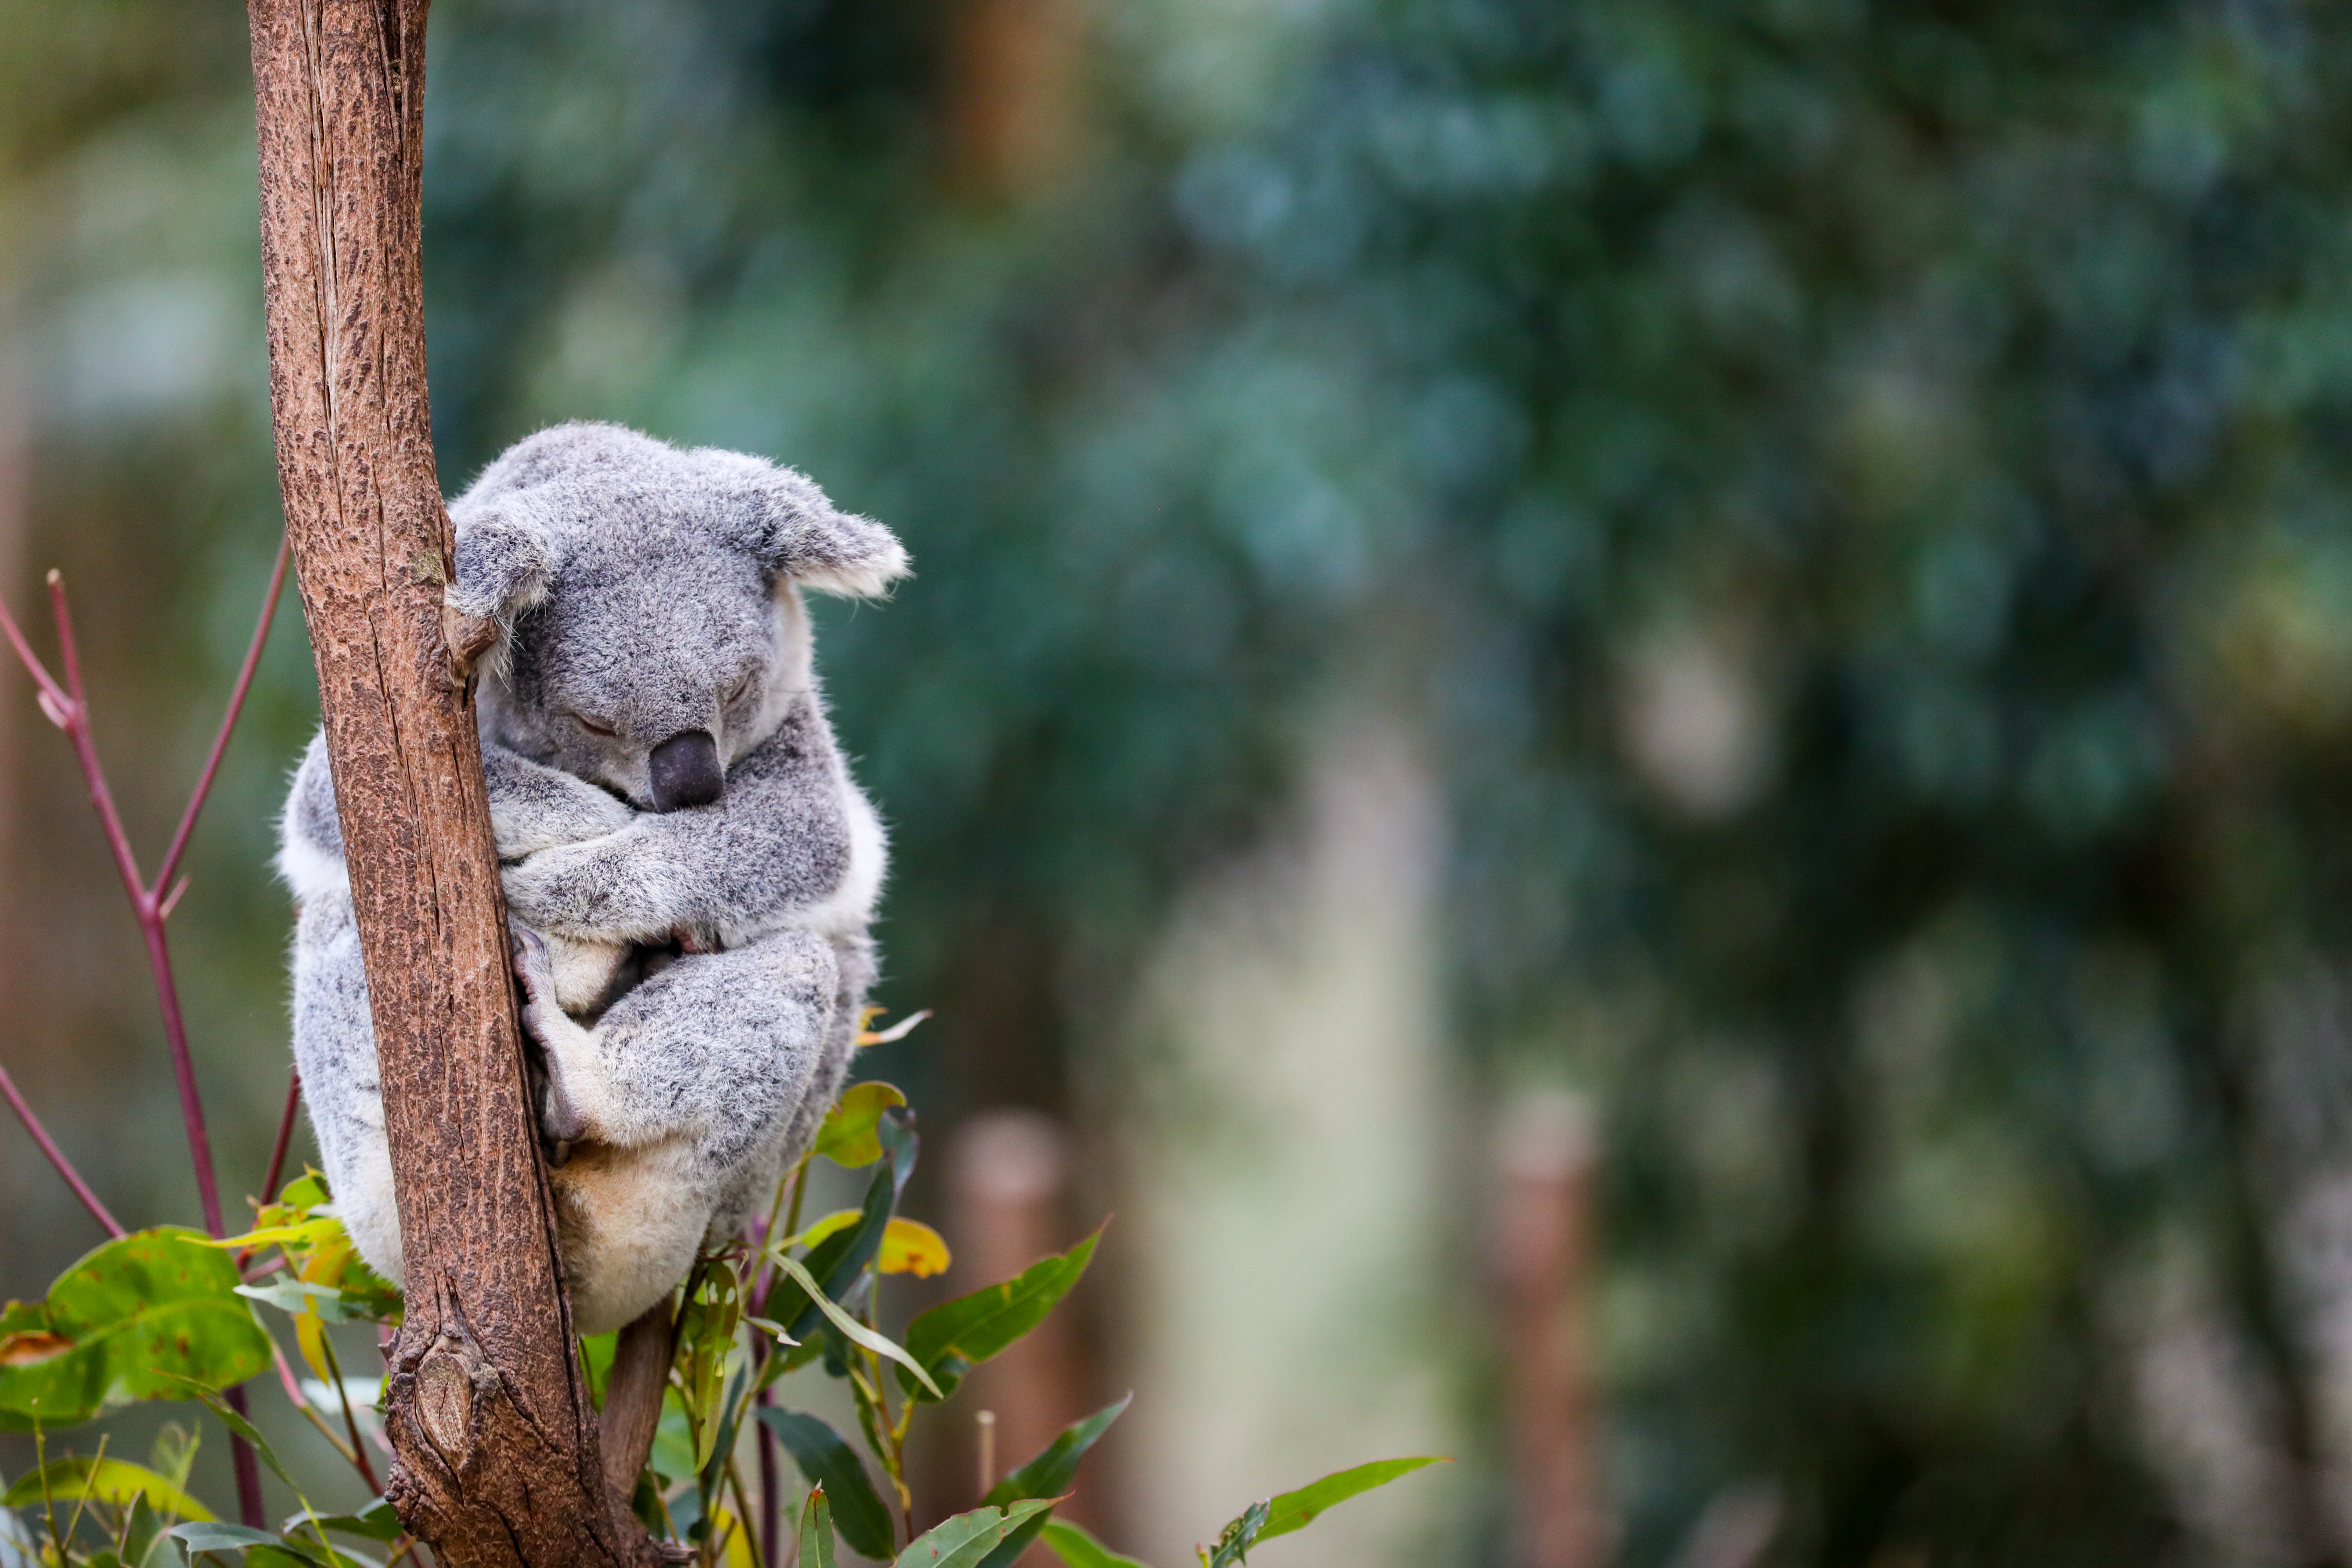 An,Australian,Koala,Bear,Sleeping,In,The,Gum,Trees.